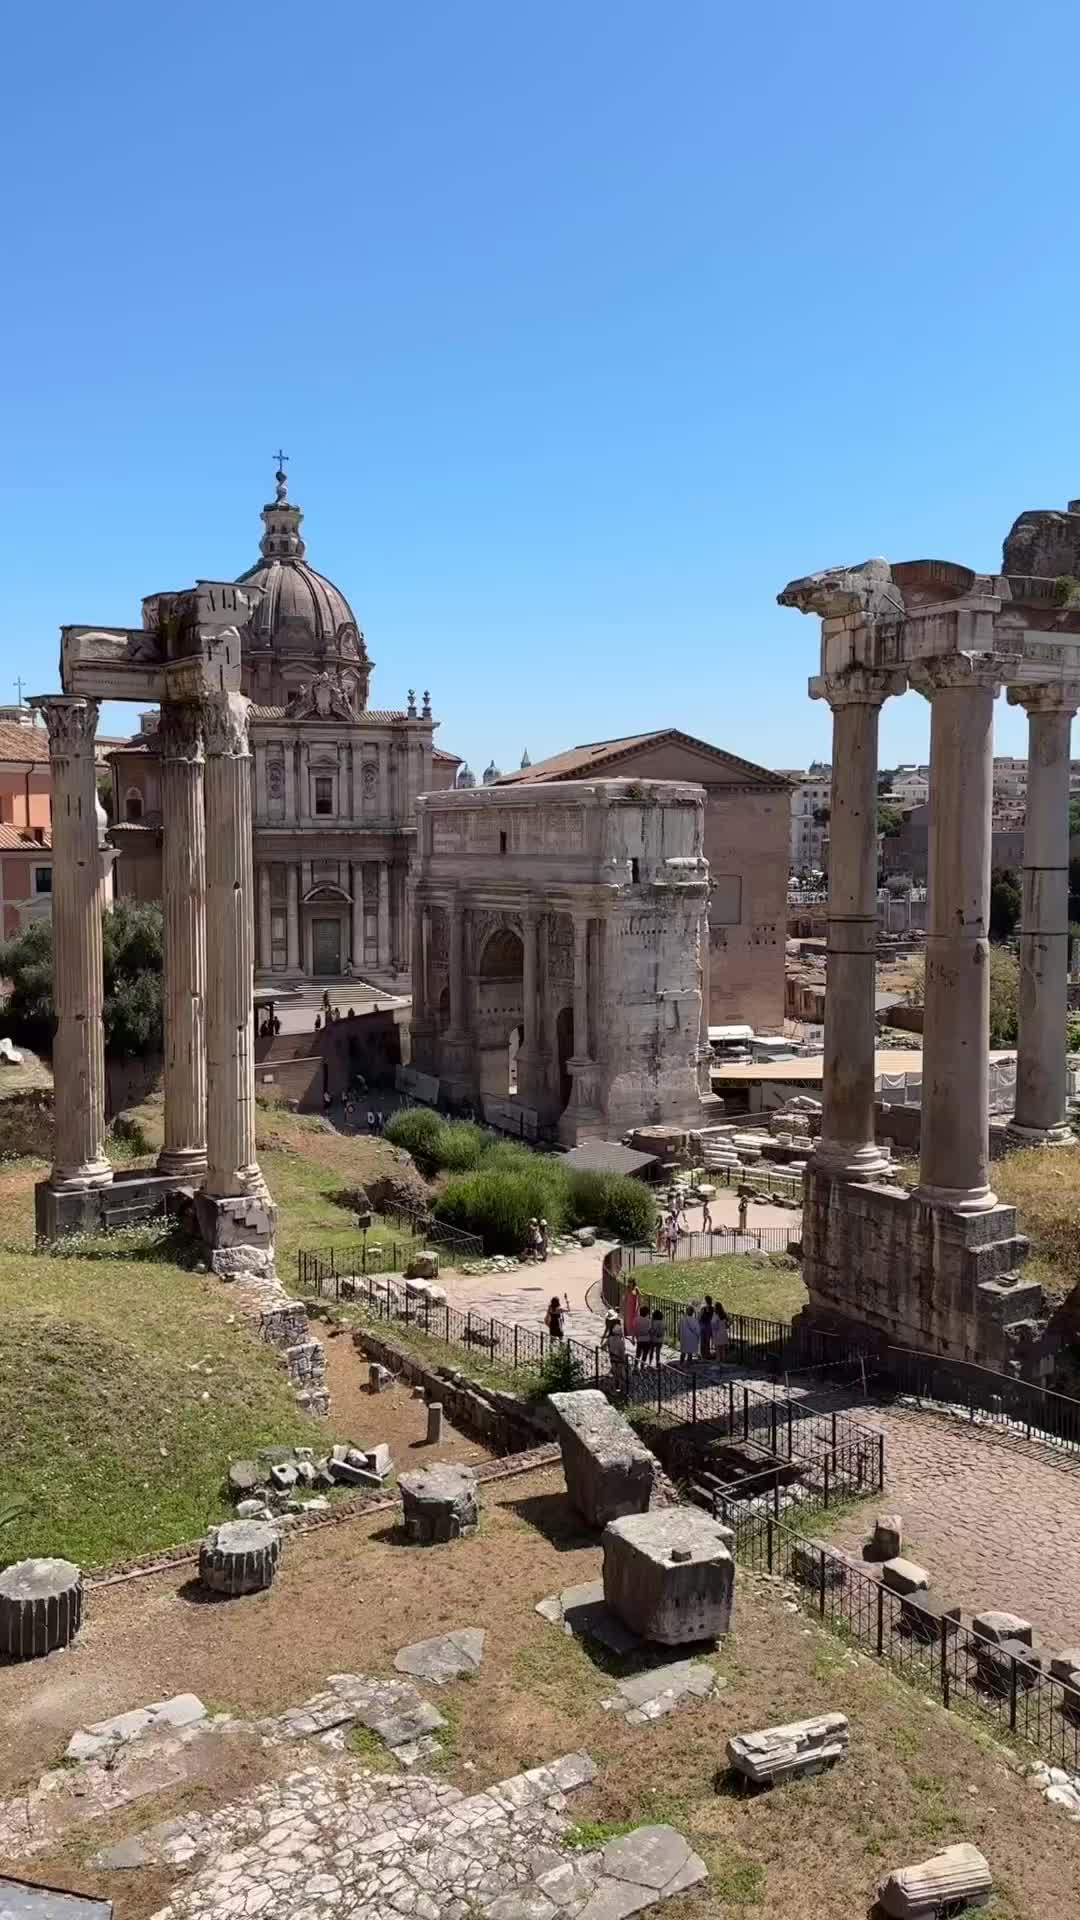 Explore Rome: A Walk Through the Eternal City